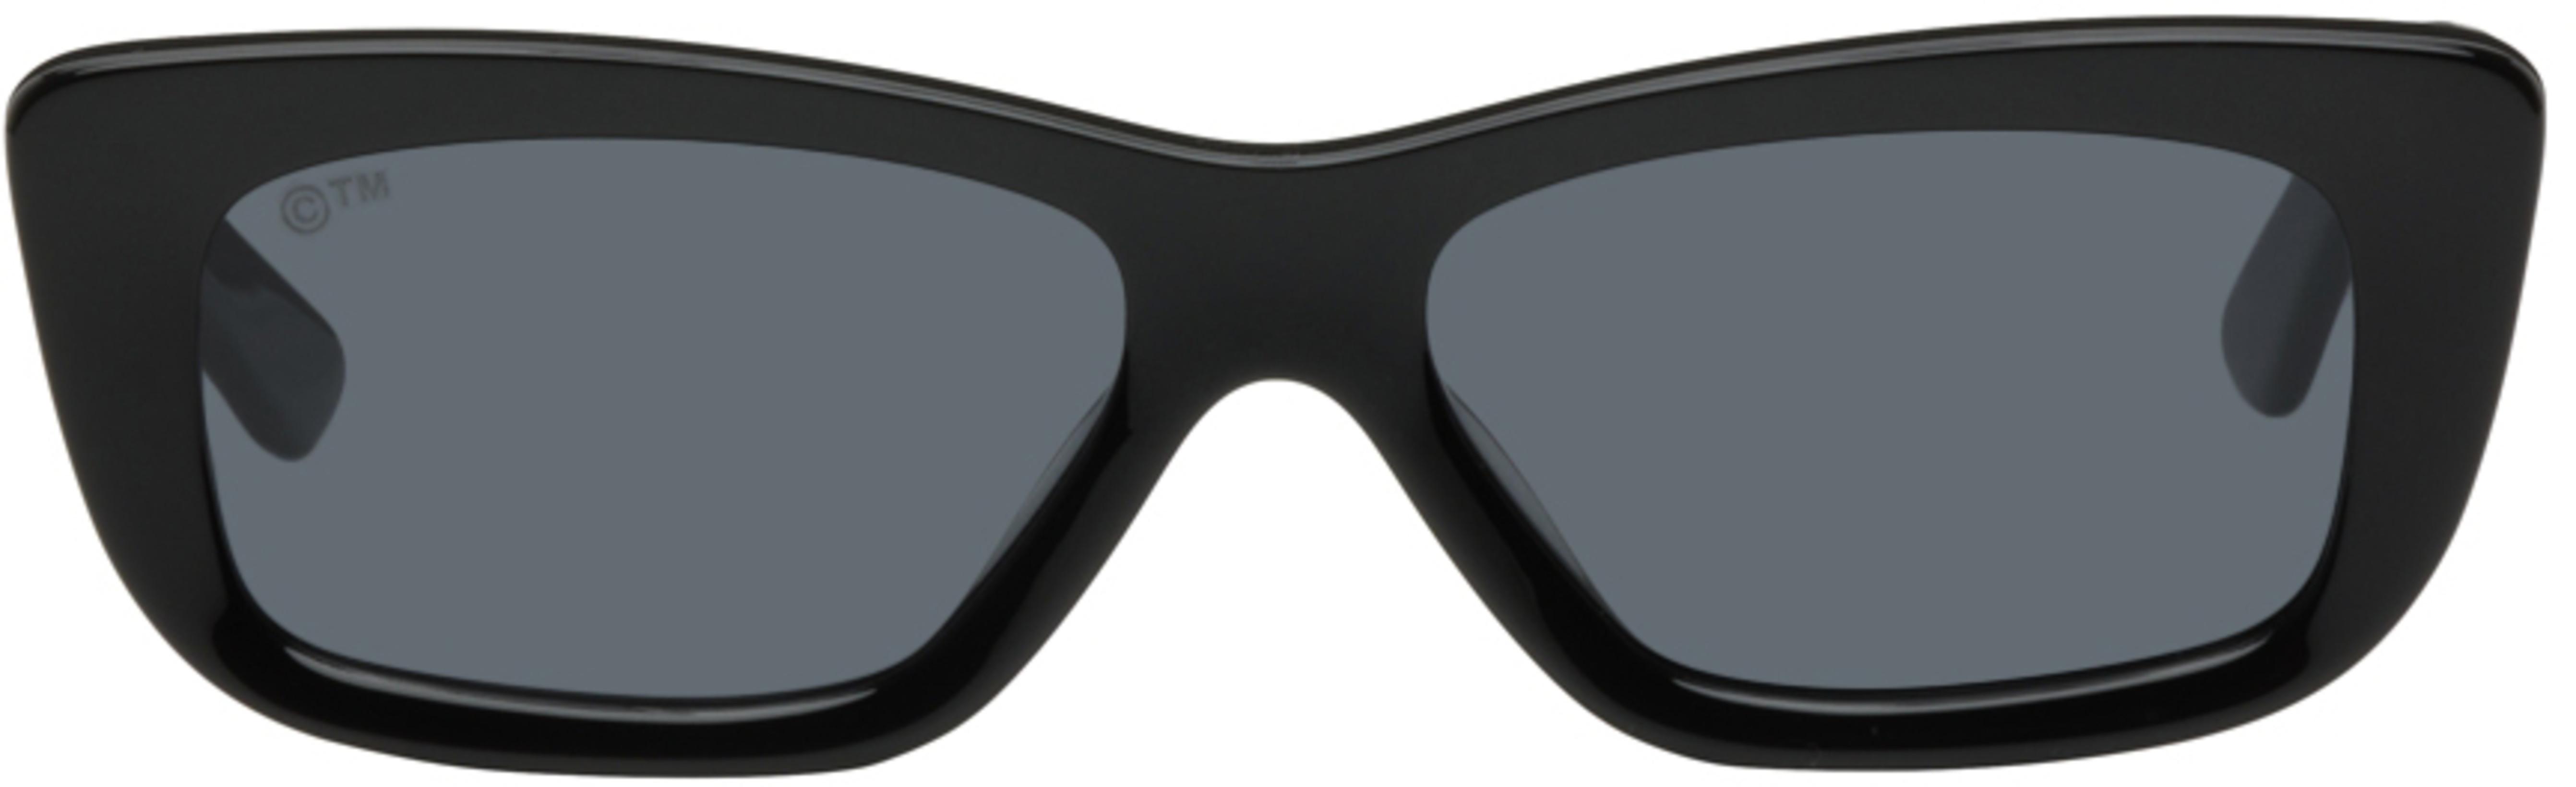 Black Frenzy Sunglasses by AKILA